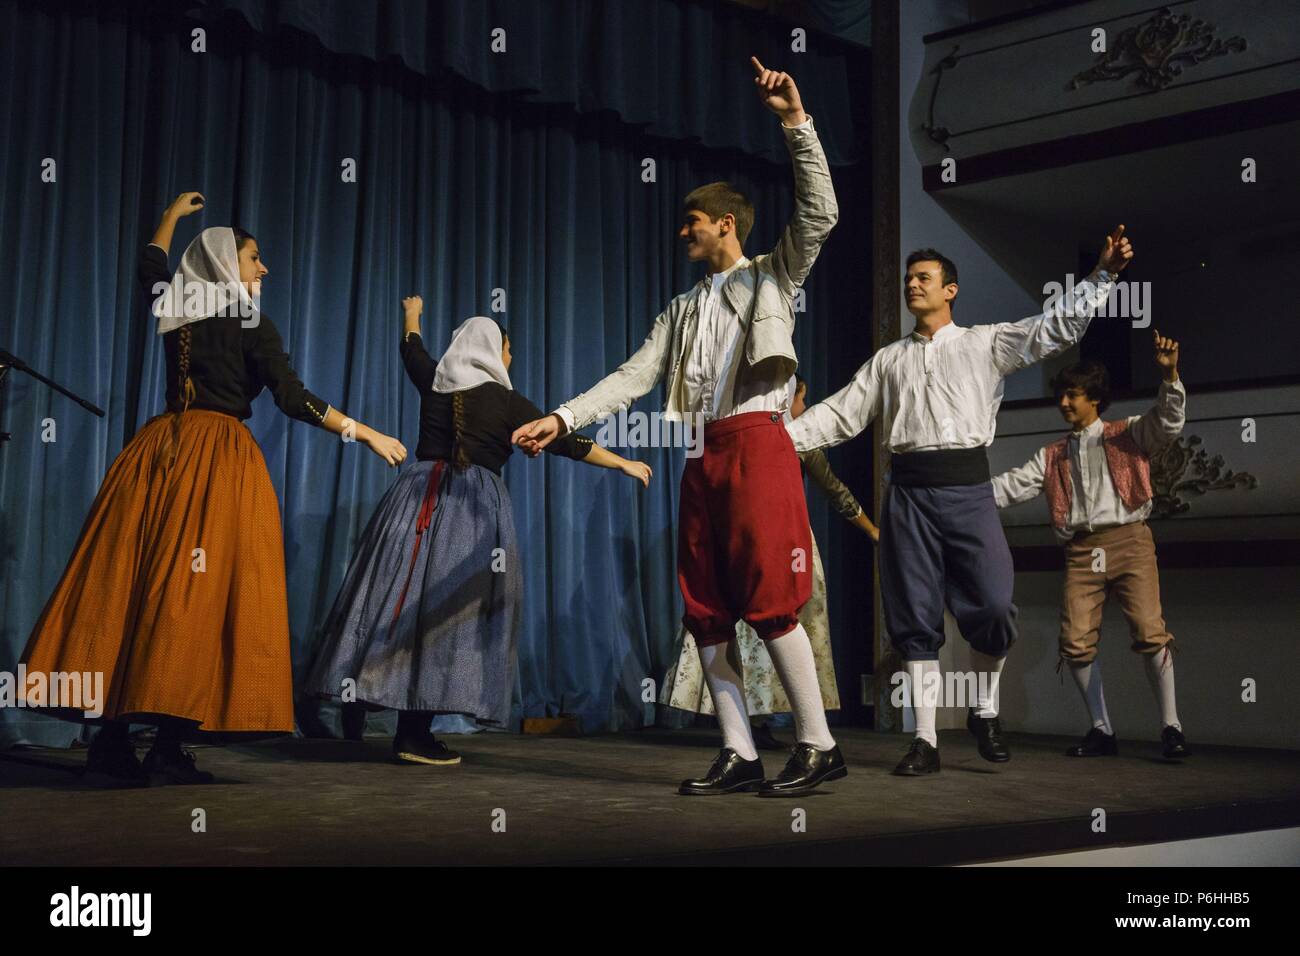 muestra de indumentaria tradicional mallorquina de los siglos XVII a XX, teatro Mar i Terra, Palma, Mallorca, islas baleares, Spain. Stock Photo